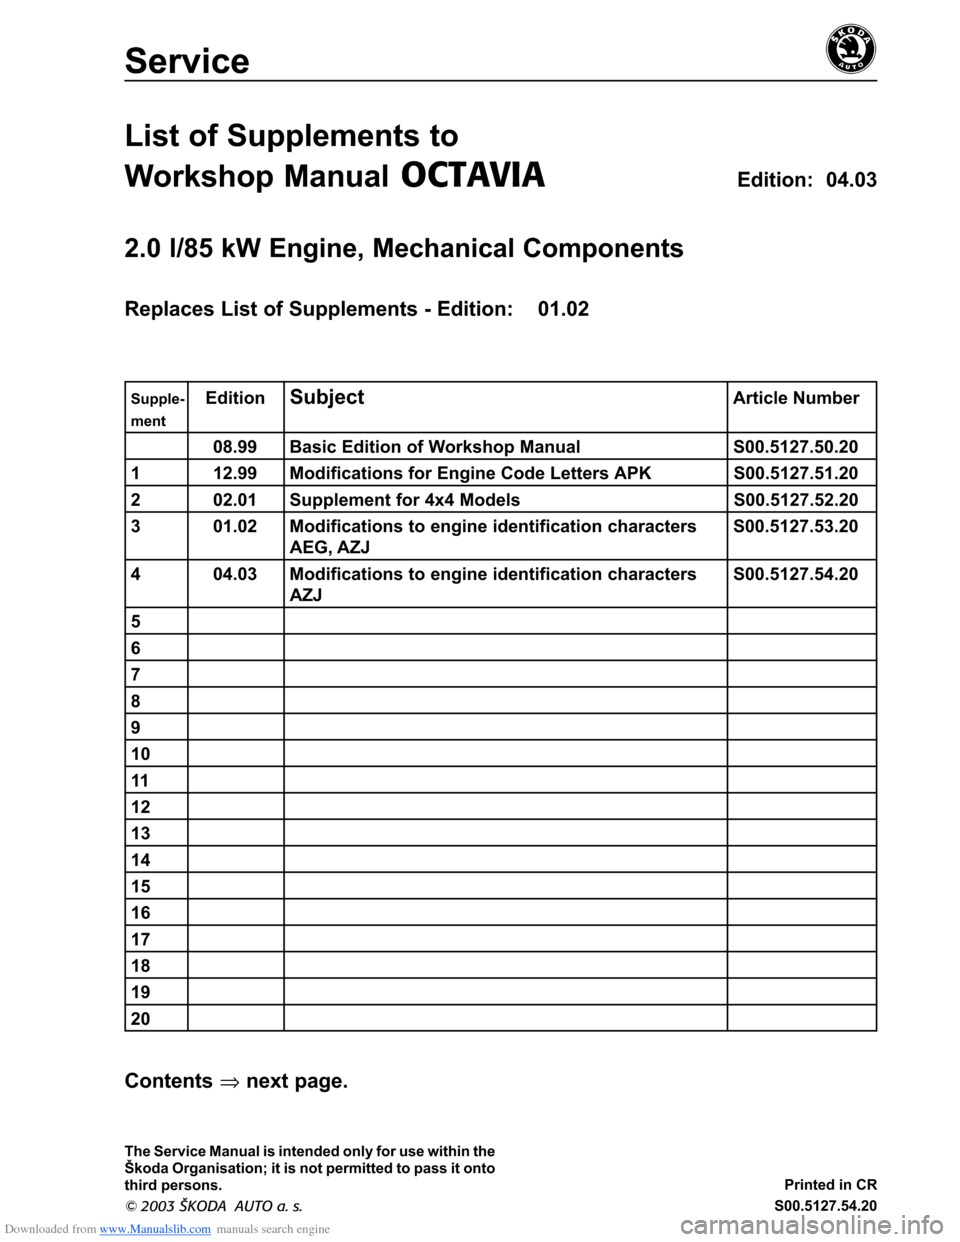 SKODA OCTAVIA 2000 1.G / (1U) 2.0 85kw Engine Workshop Manual Downloaded from www.Manualslib.com manuals search engine �������
���������������������� 
����������������
����������������������
����������������������������������������� 
����������������������������